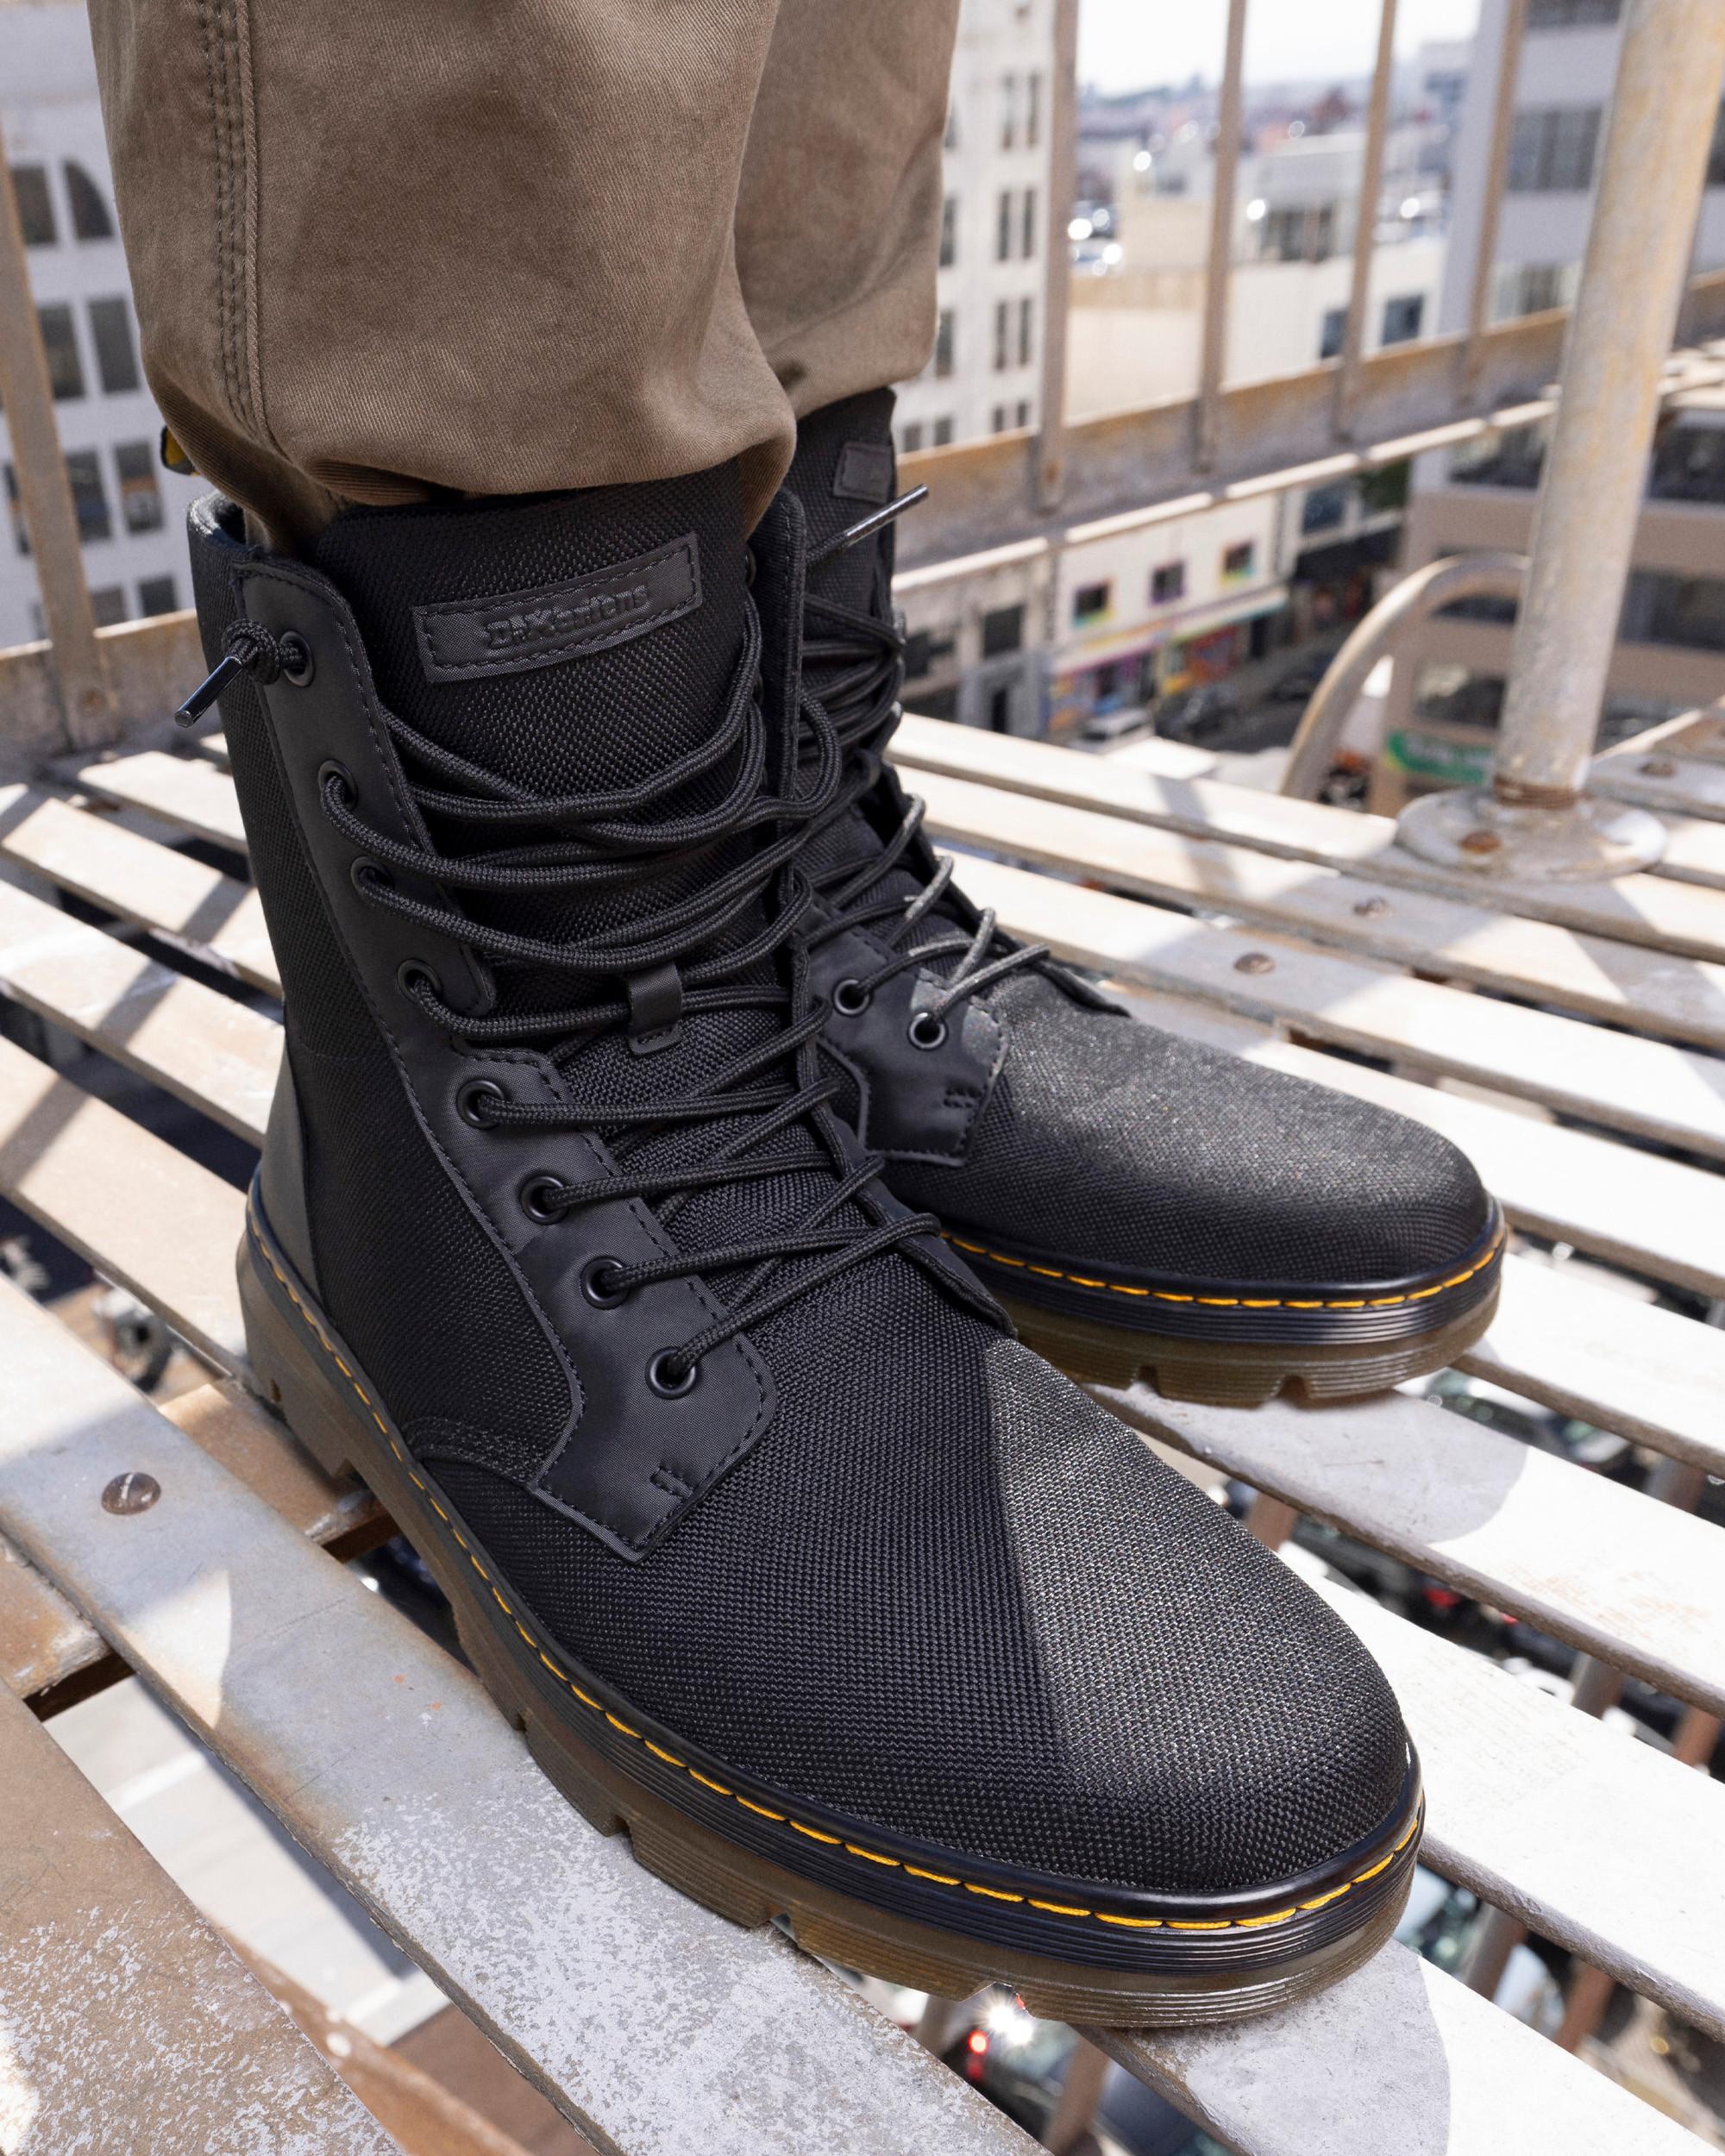 doc martens nylon boots